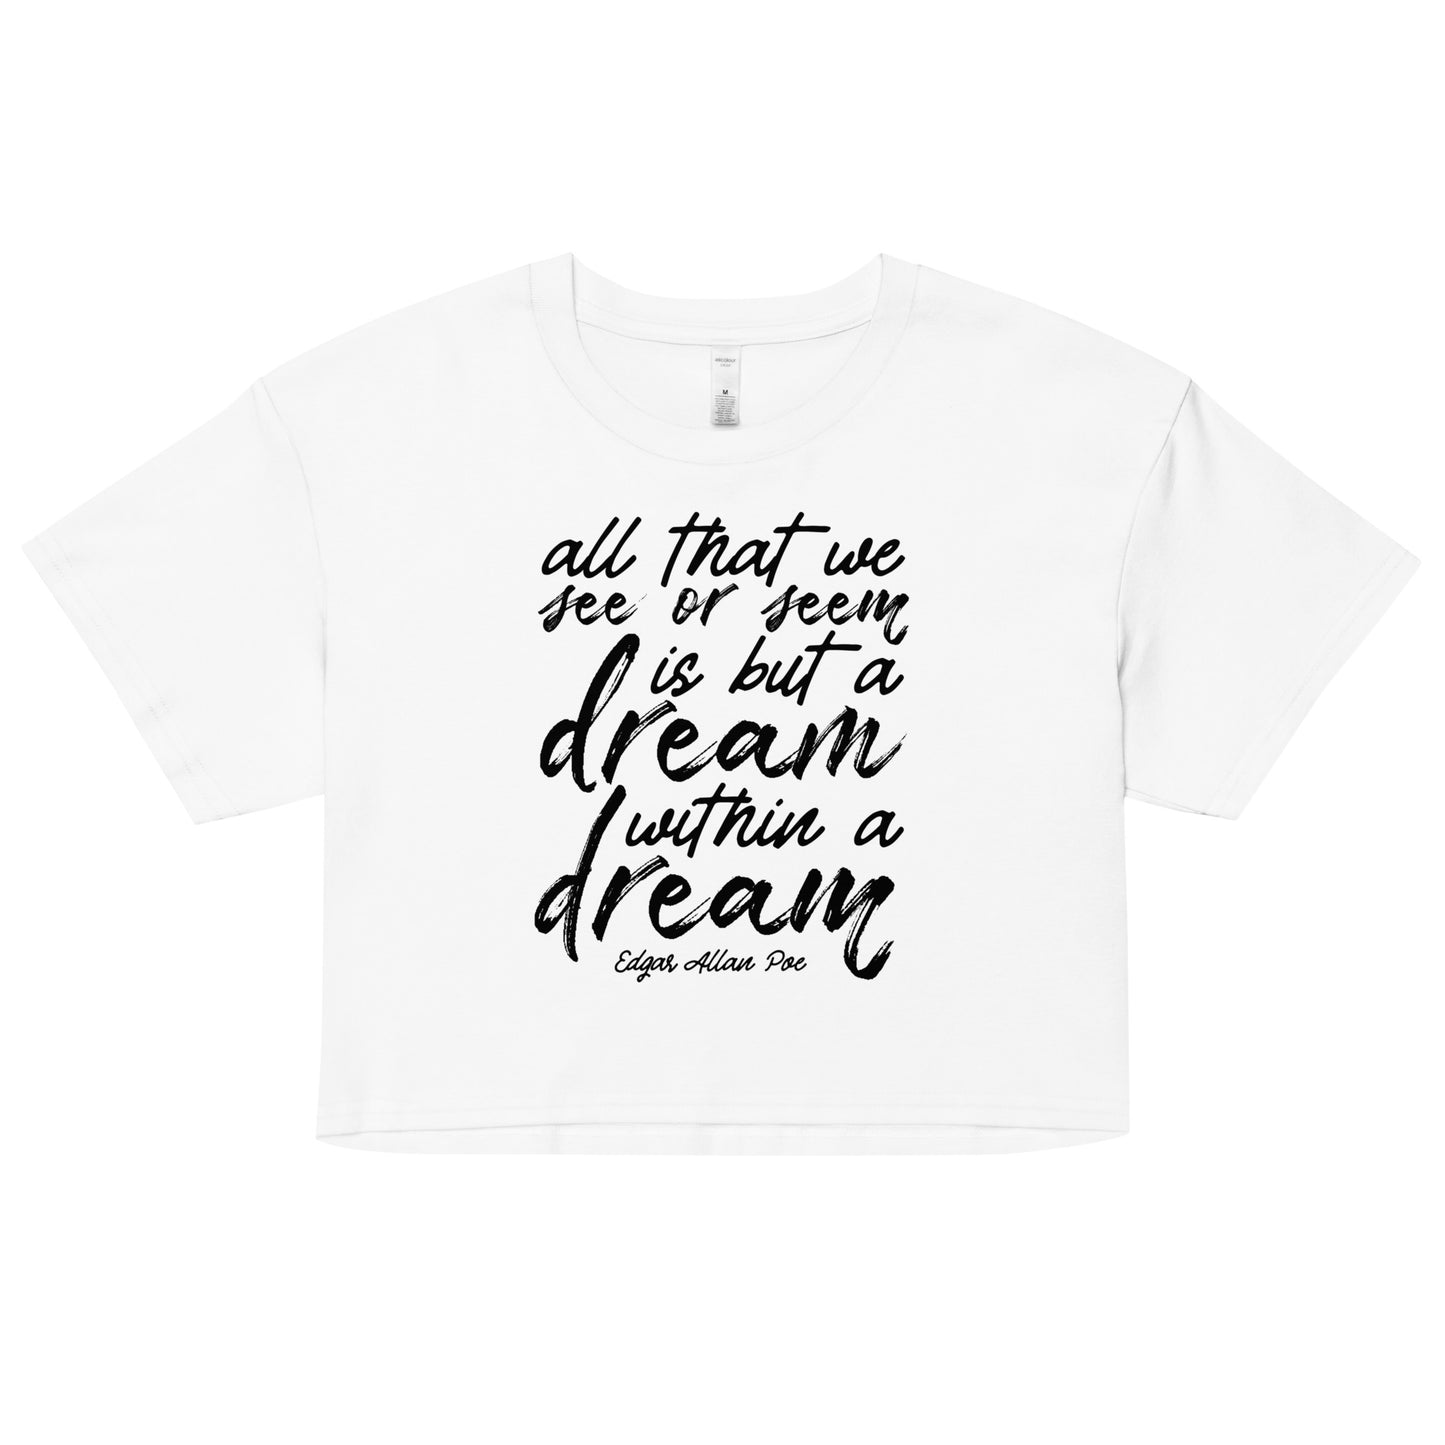 Dream Within a Dream Edgar Allan Poe Quote- Women’s crop top - White Front